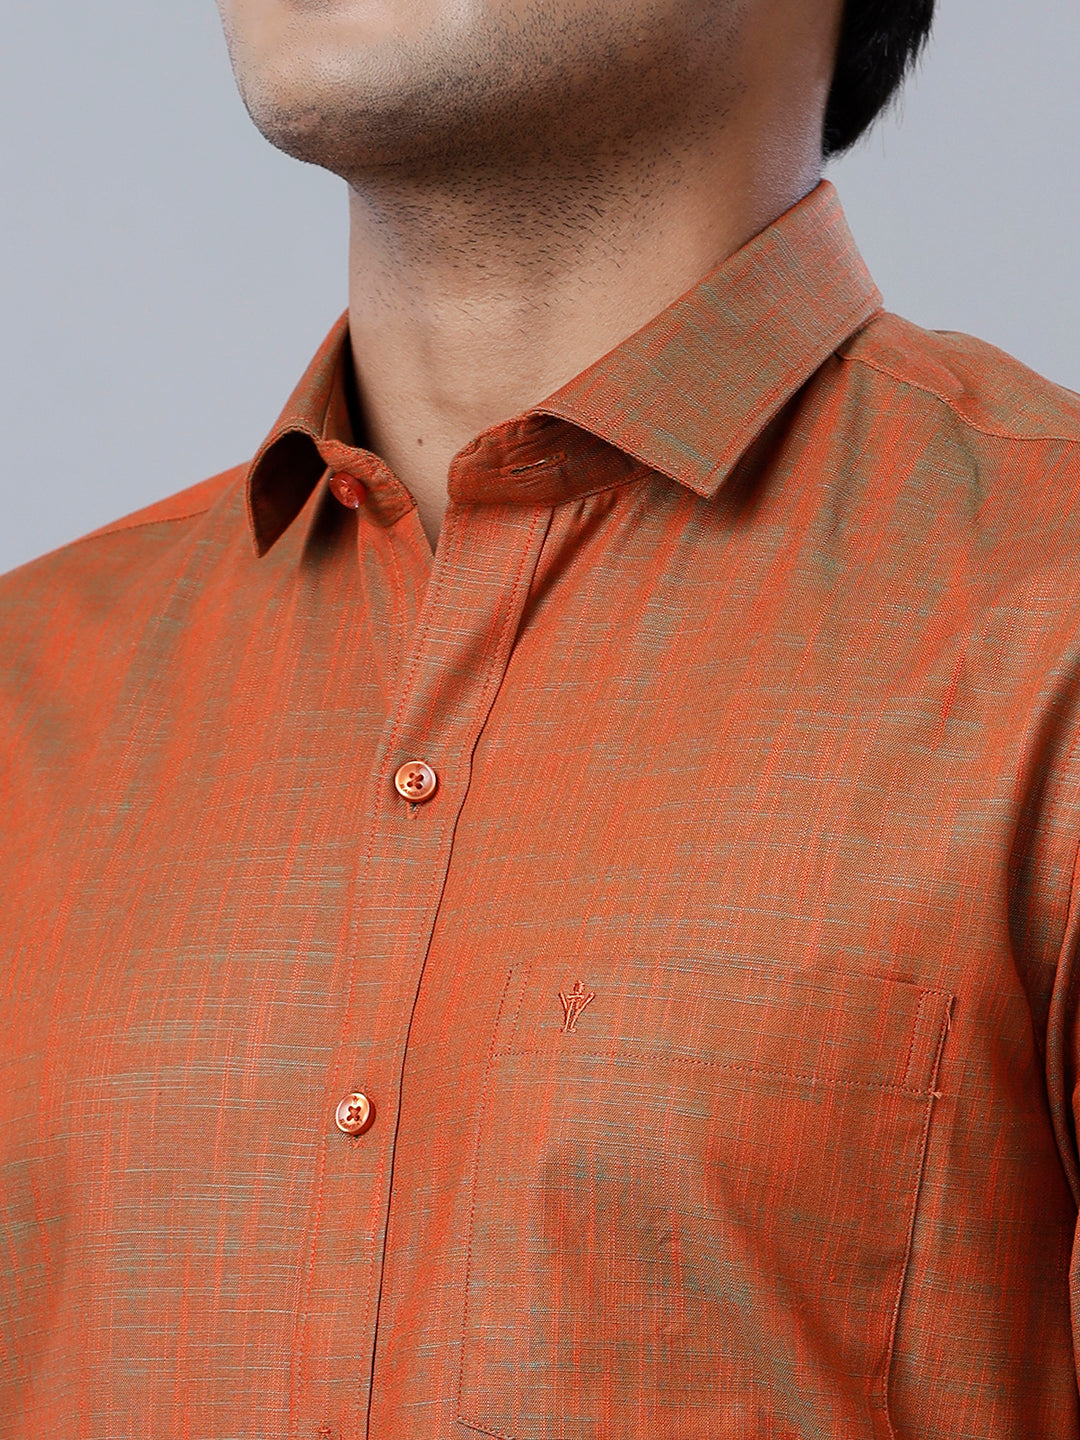 Mens Formal Shirt Full Sleeves Reddish Brown CL2 GT30-Zoom view